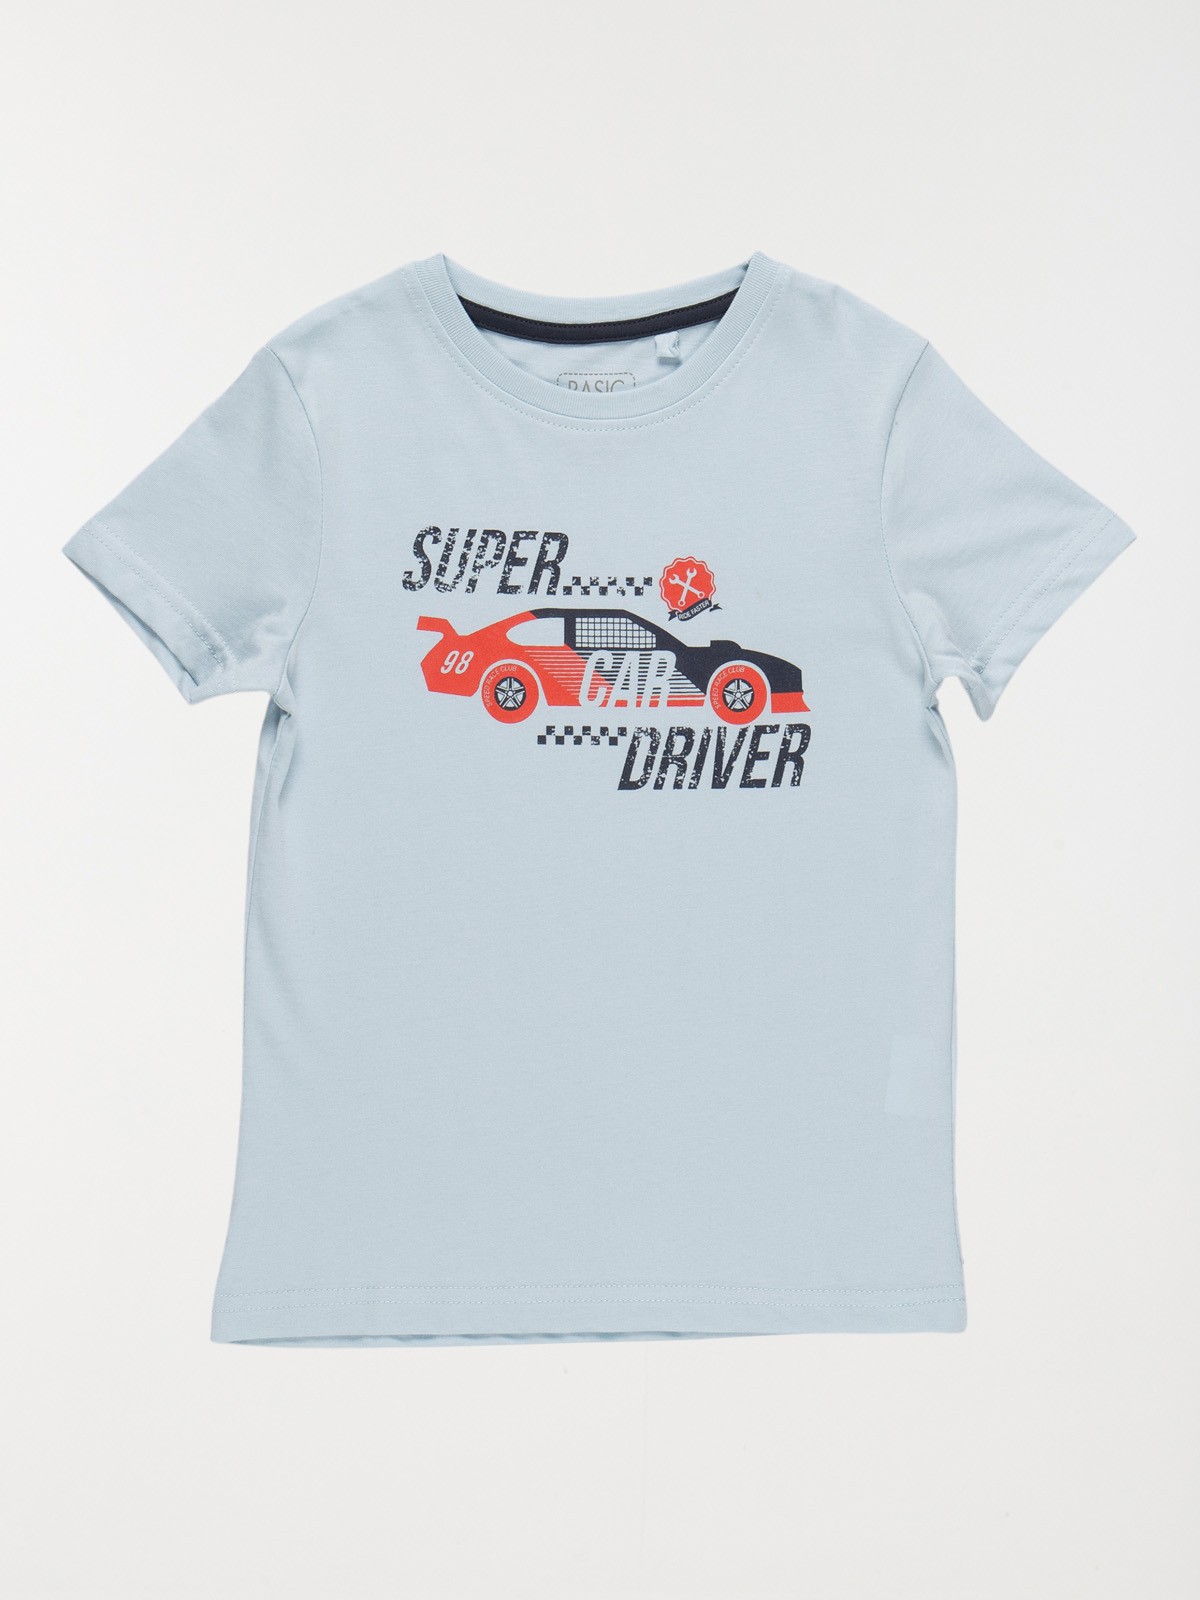 T-shirt motif voiture homme - DistriCenter